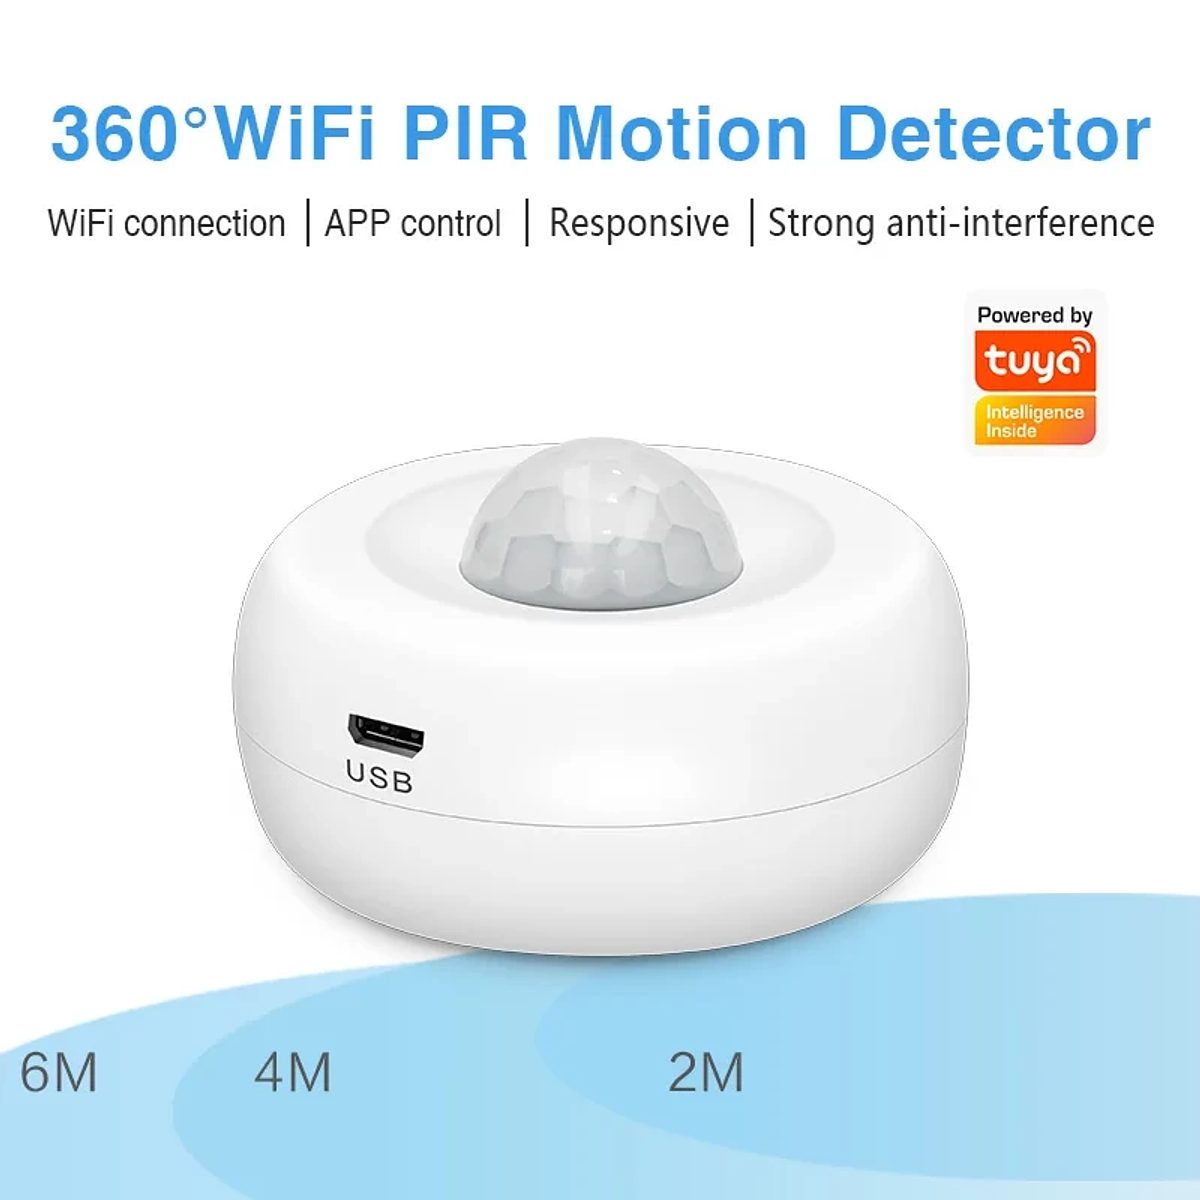 Sensor PIR Wifi Tuya Smart Life - InfotecnologiaSur